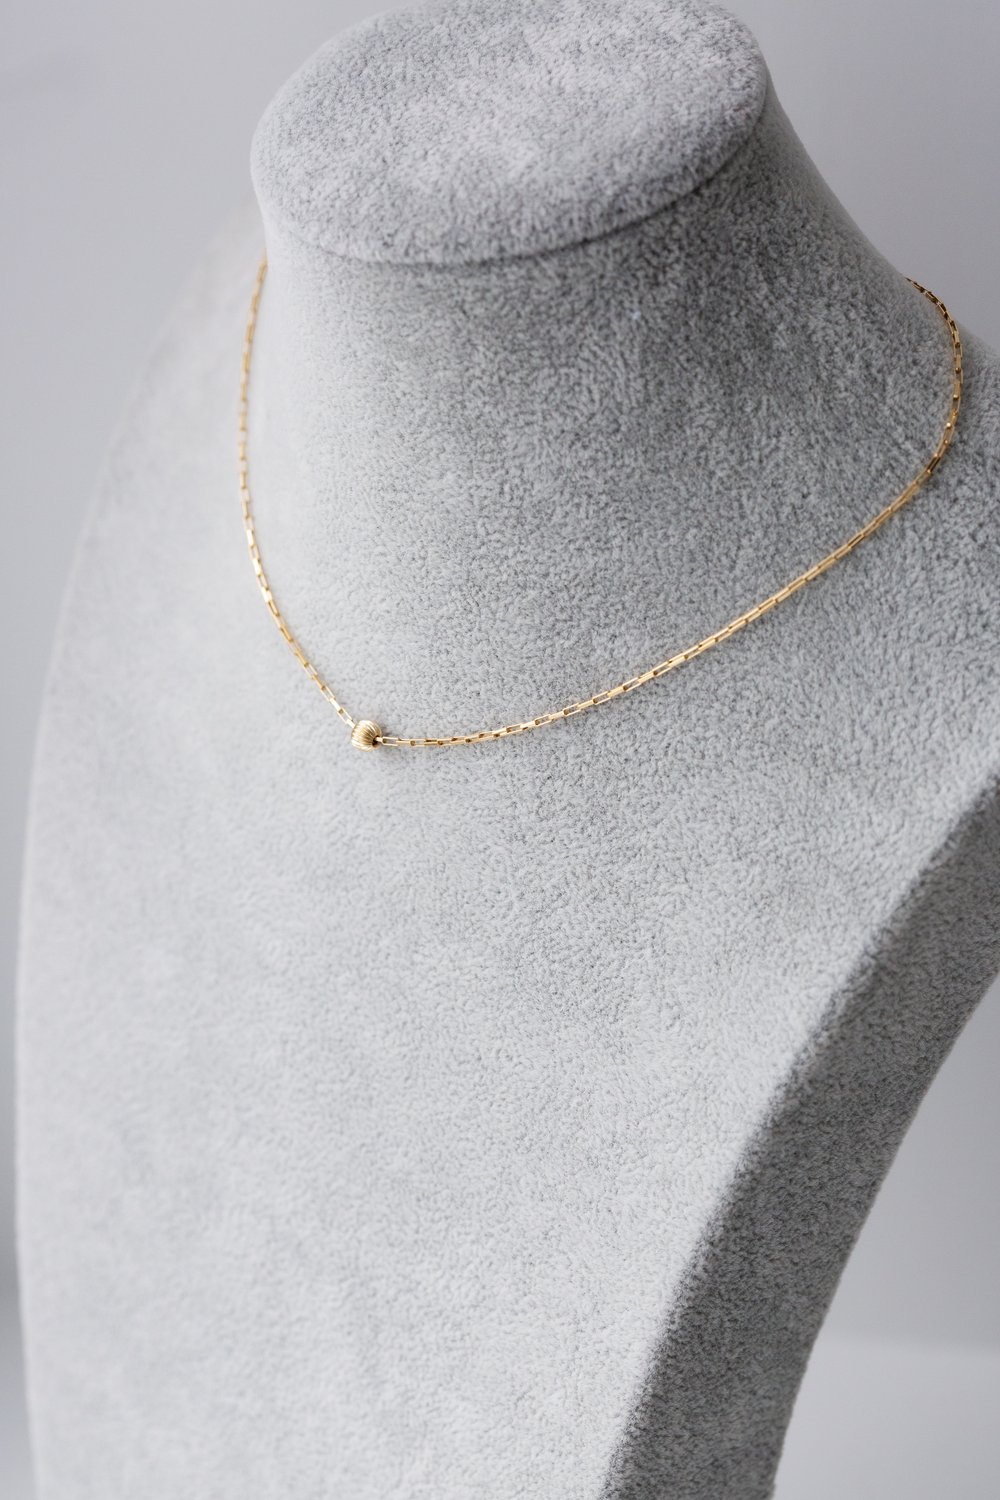 Thin Gold Choker Gold Choker Necklace 14kt Gold Filled 